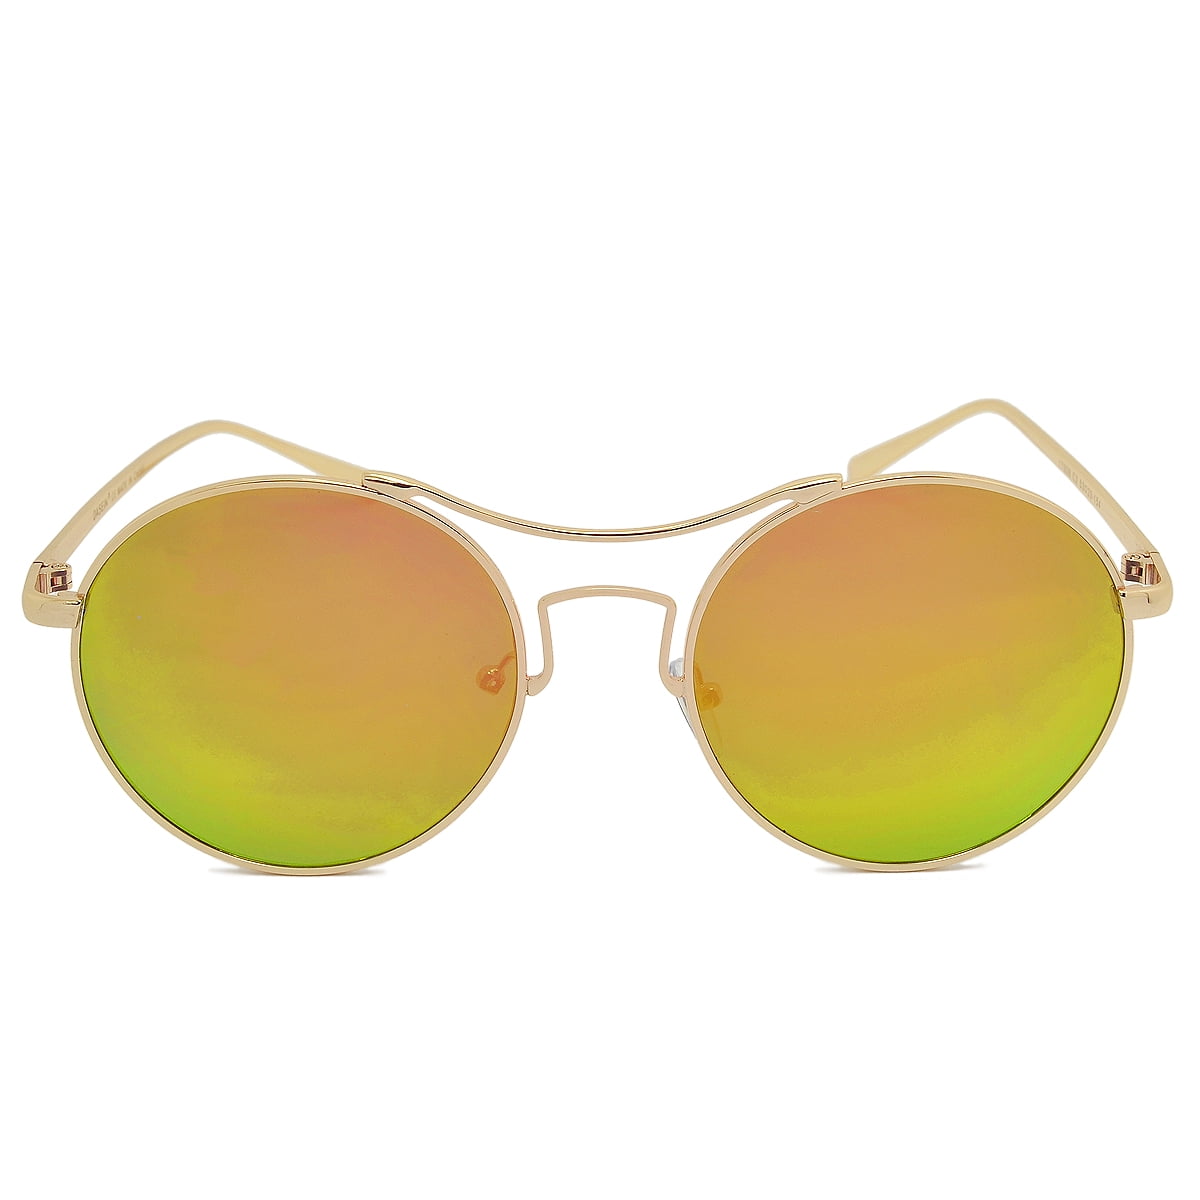 Dasein Retro Round UV400 Double Bridge Polarized Sunglasses - image 1 of 4